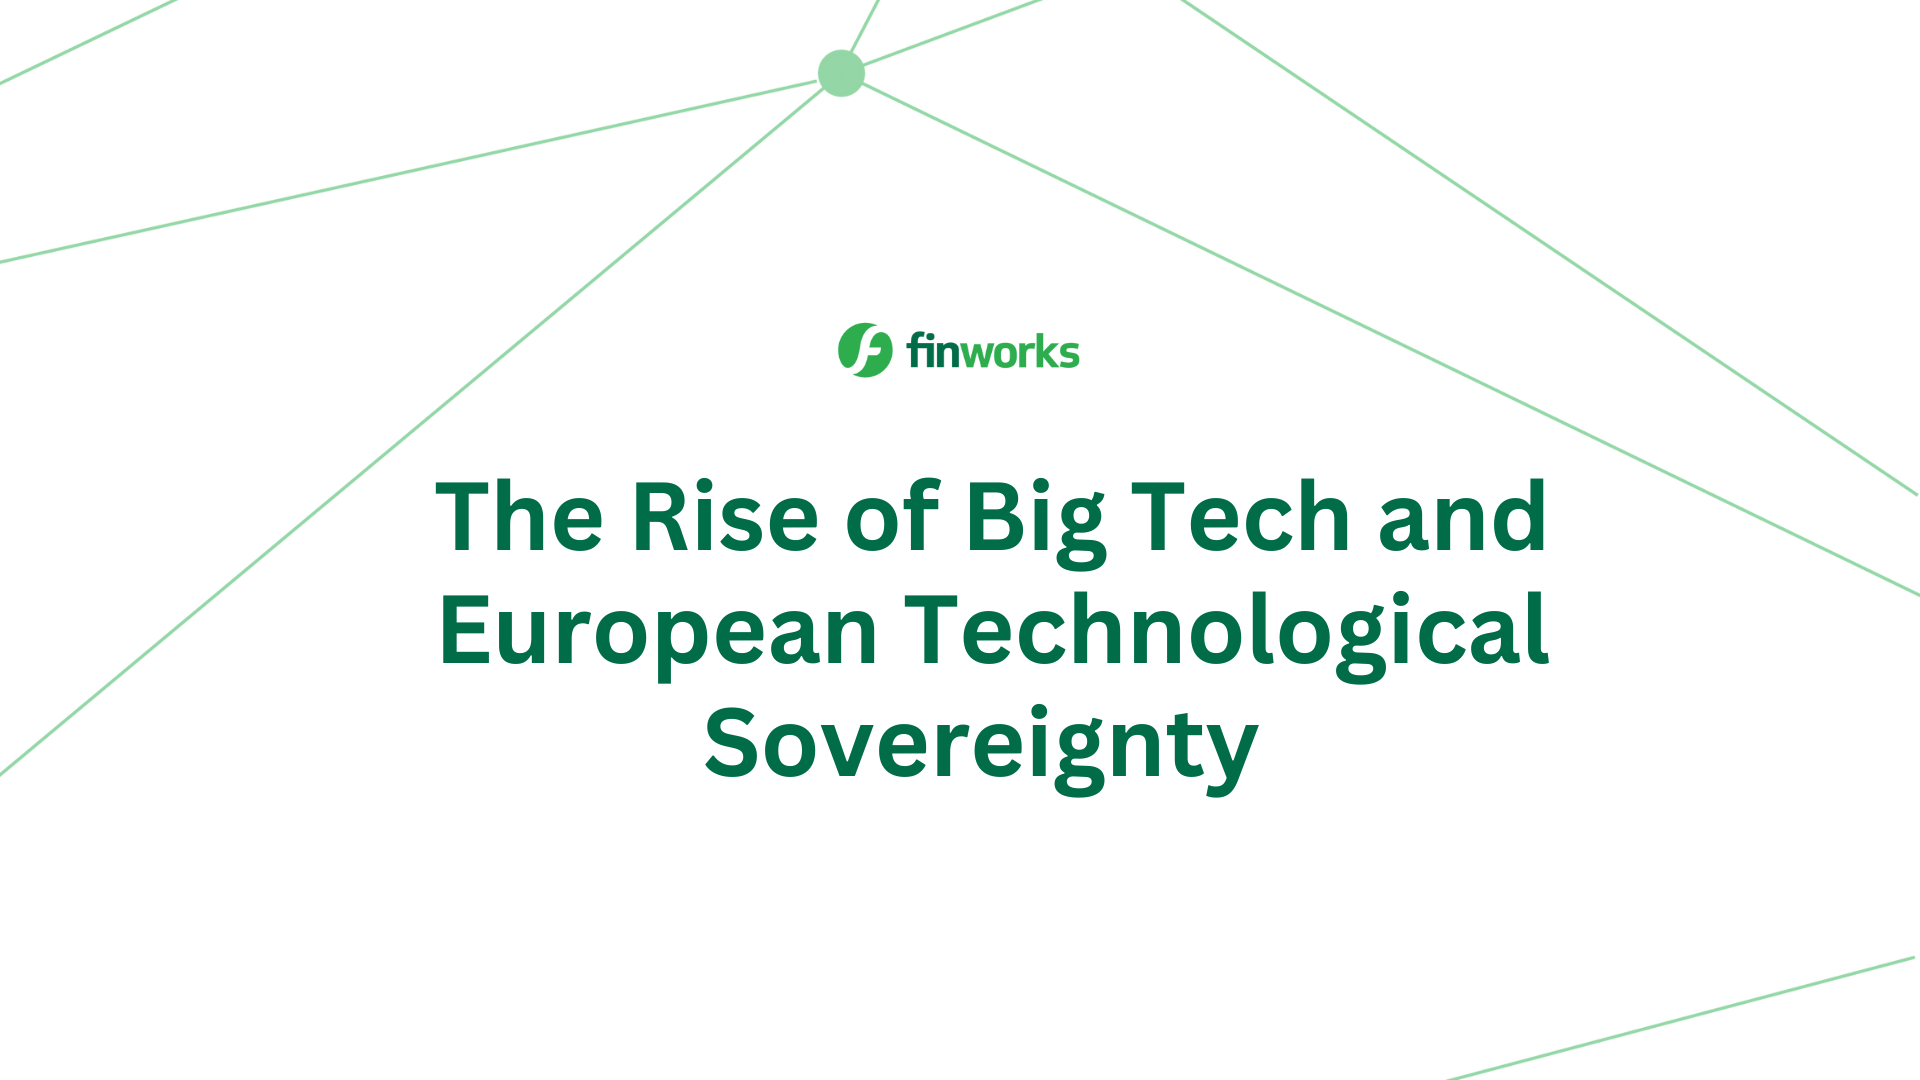 Big Tech and European Technological Sovereignty